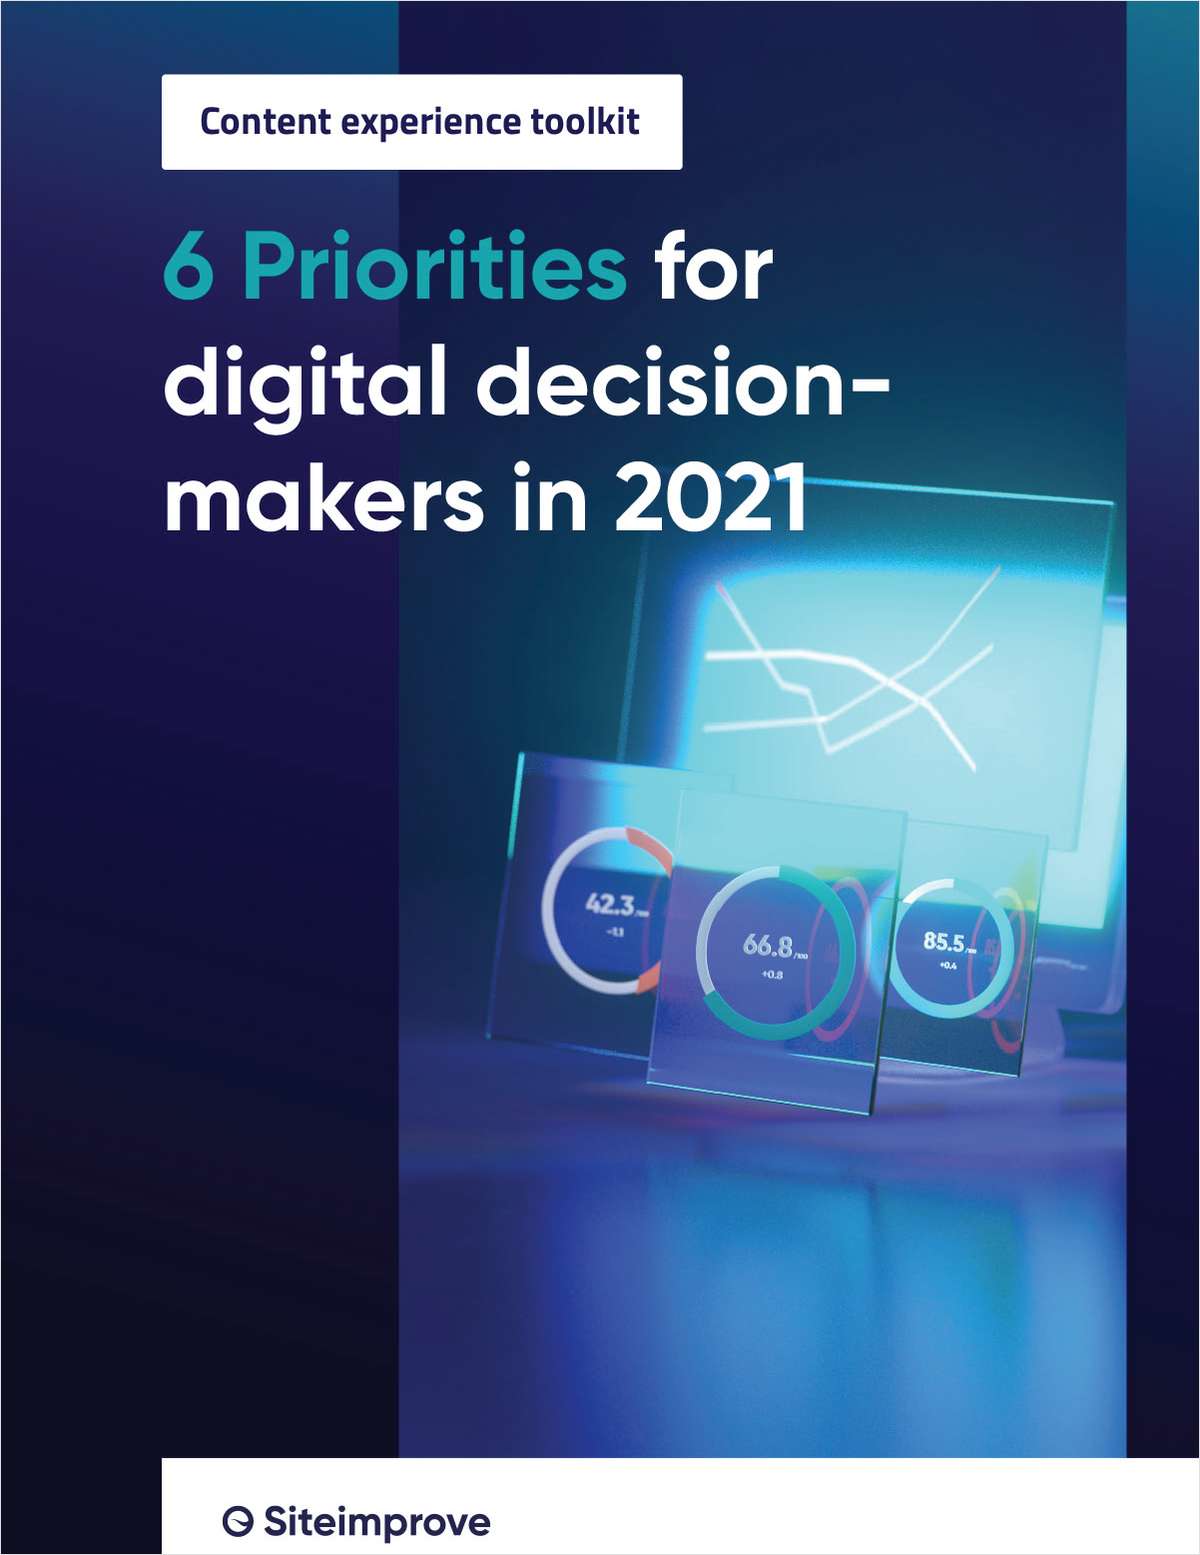 6 Priorities for digital decision-makers in 2021